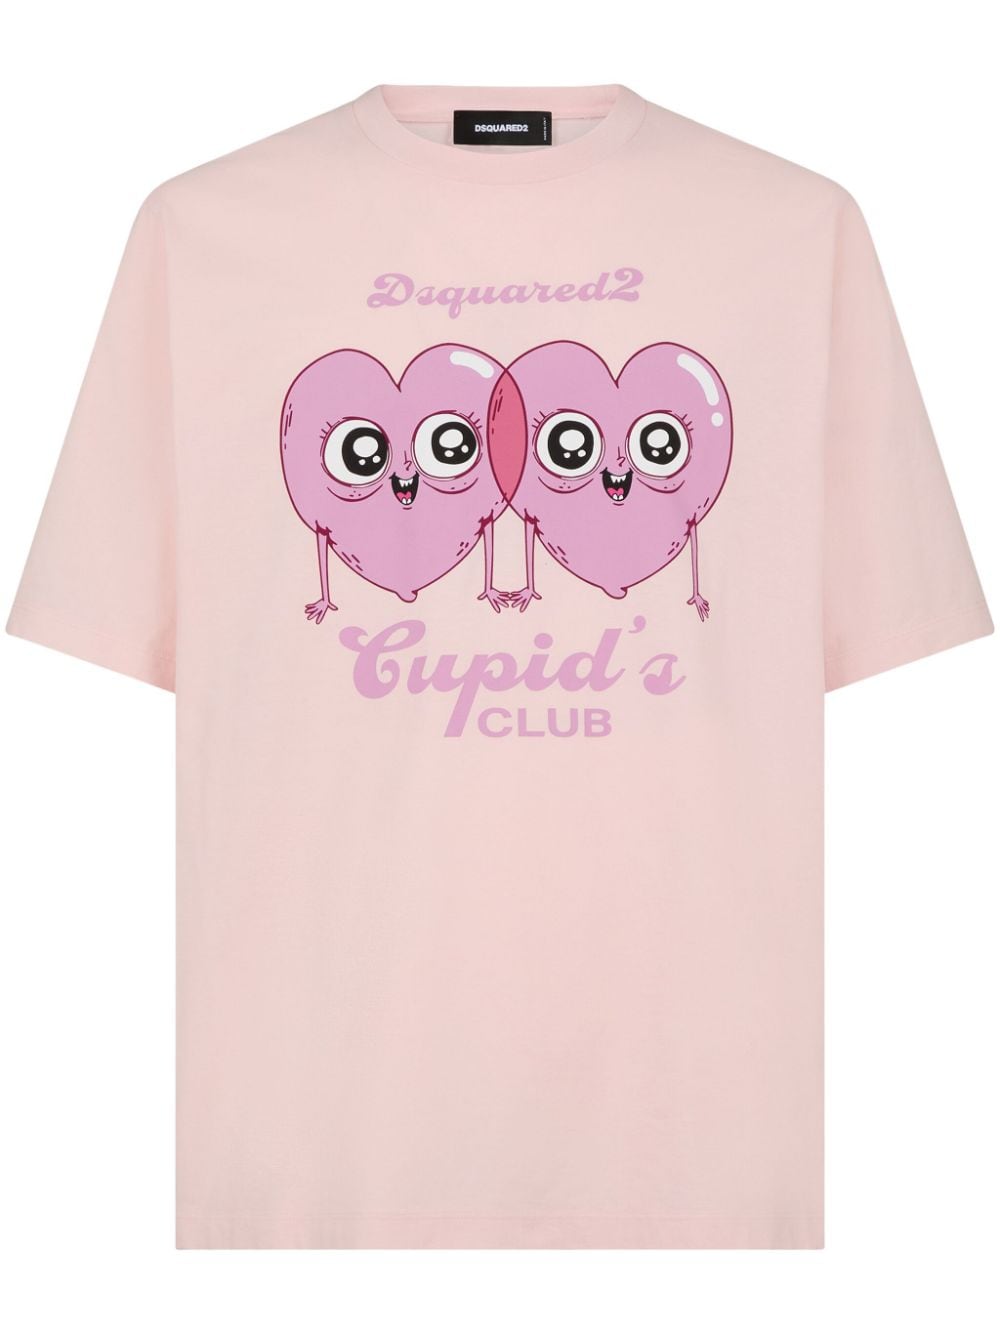 Dsquared2 Cupid's Club cotton T-shirt - Pink von Dsquared2